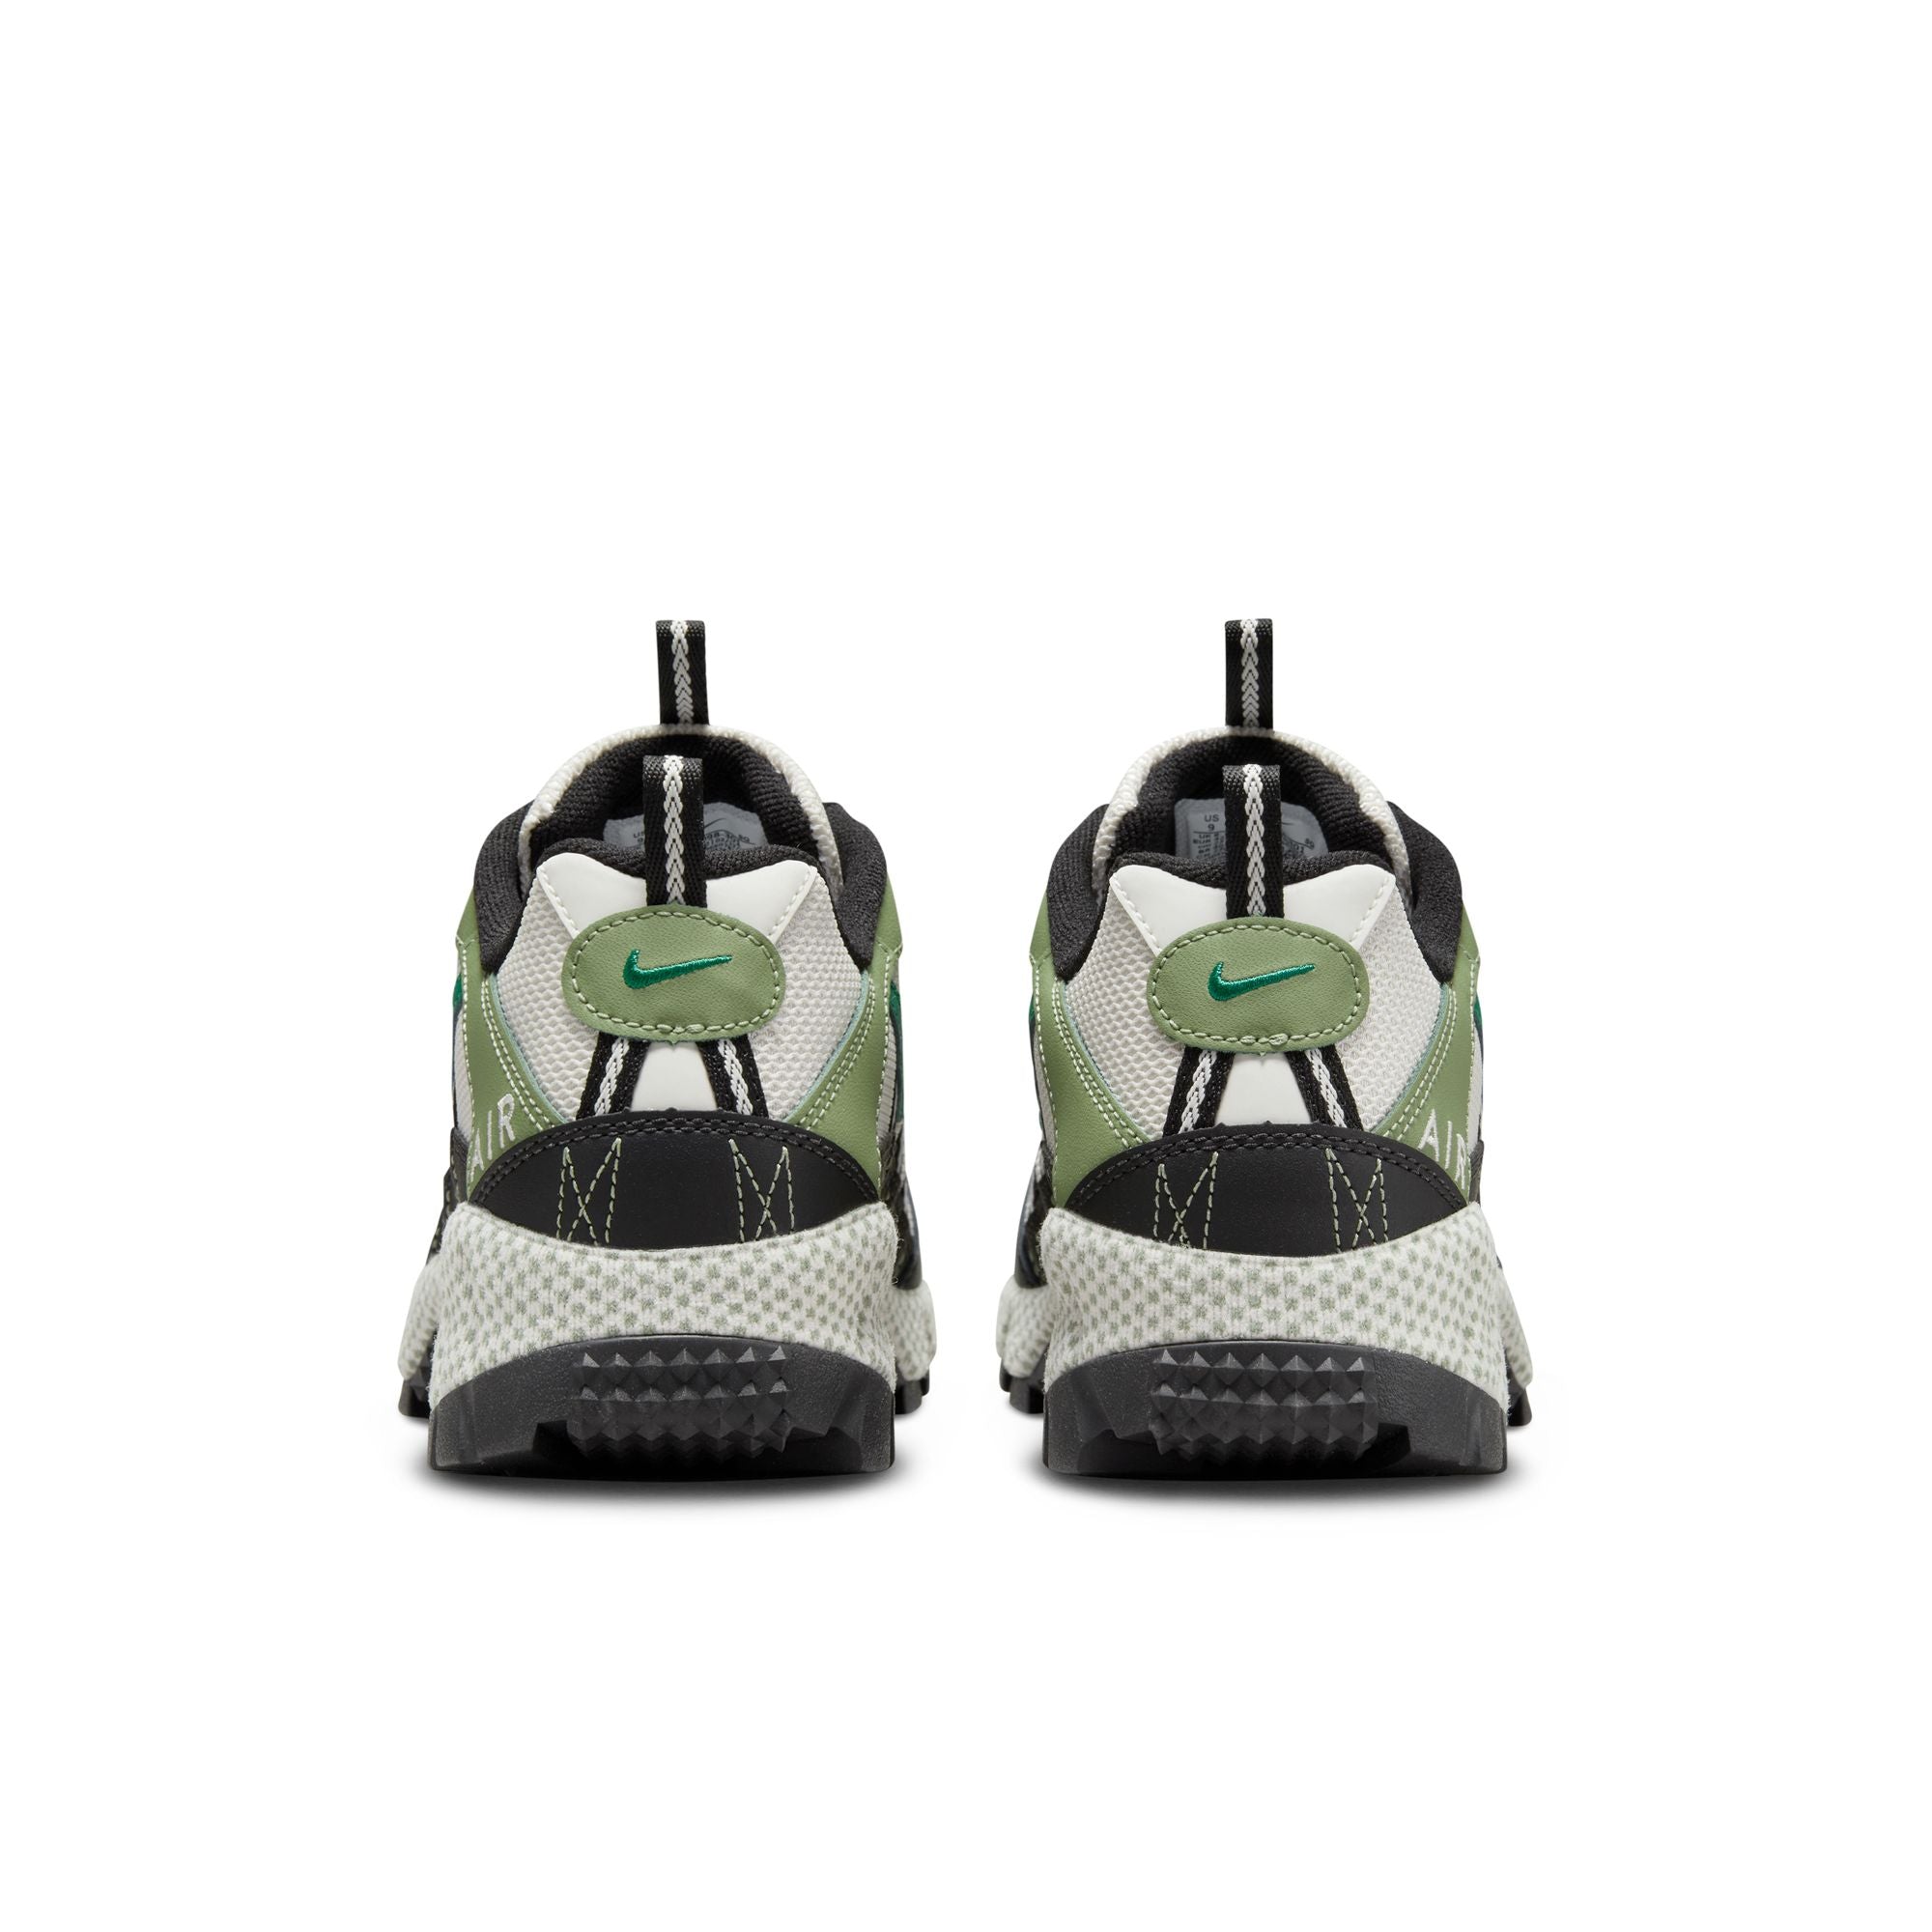 Nike Air Humara QS image